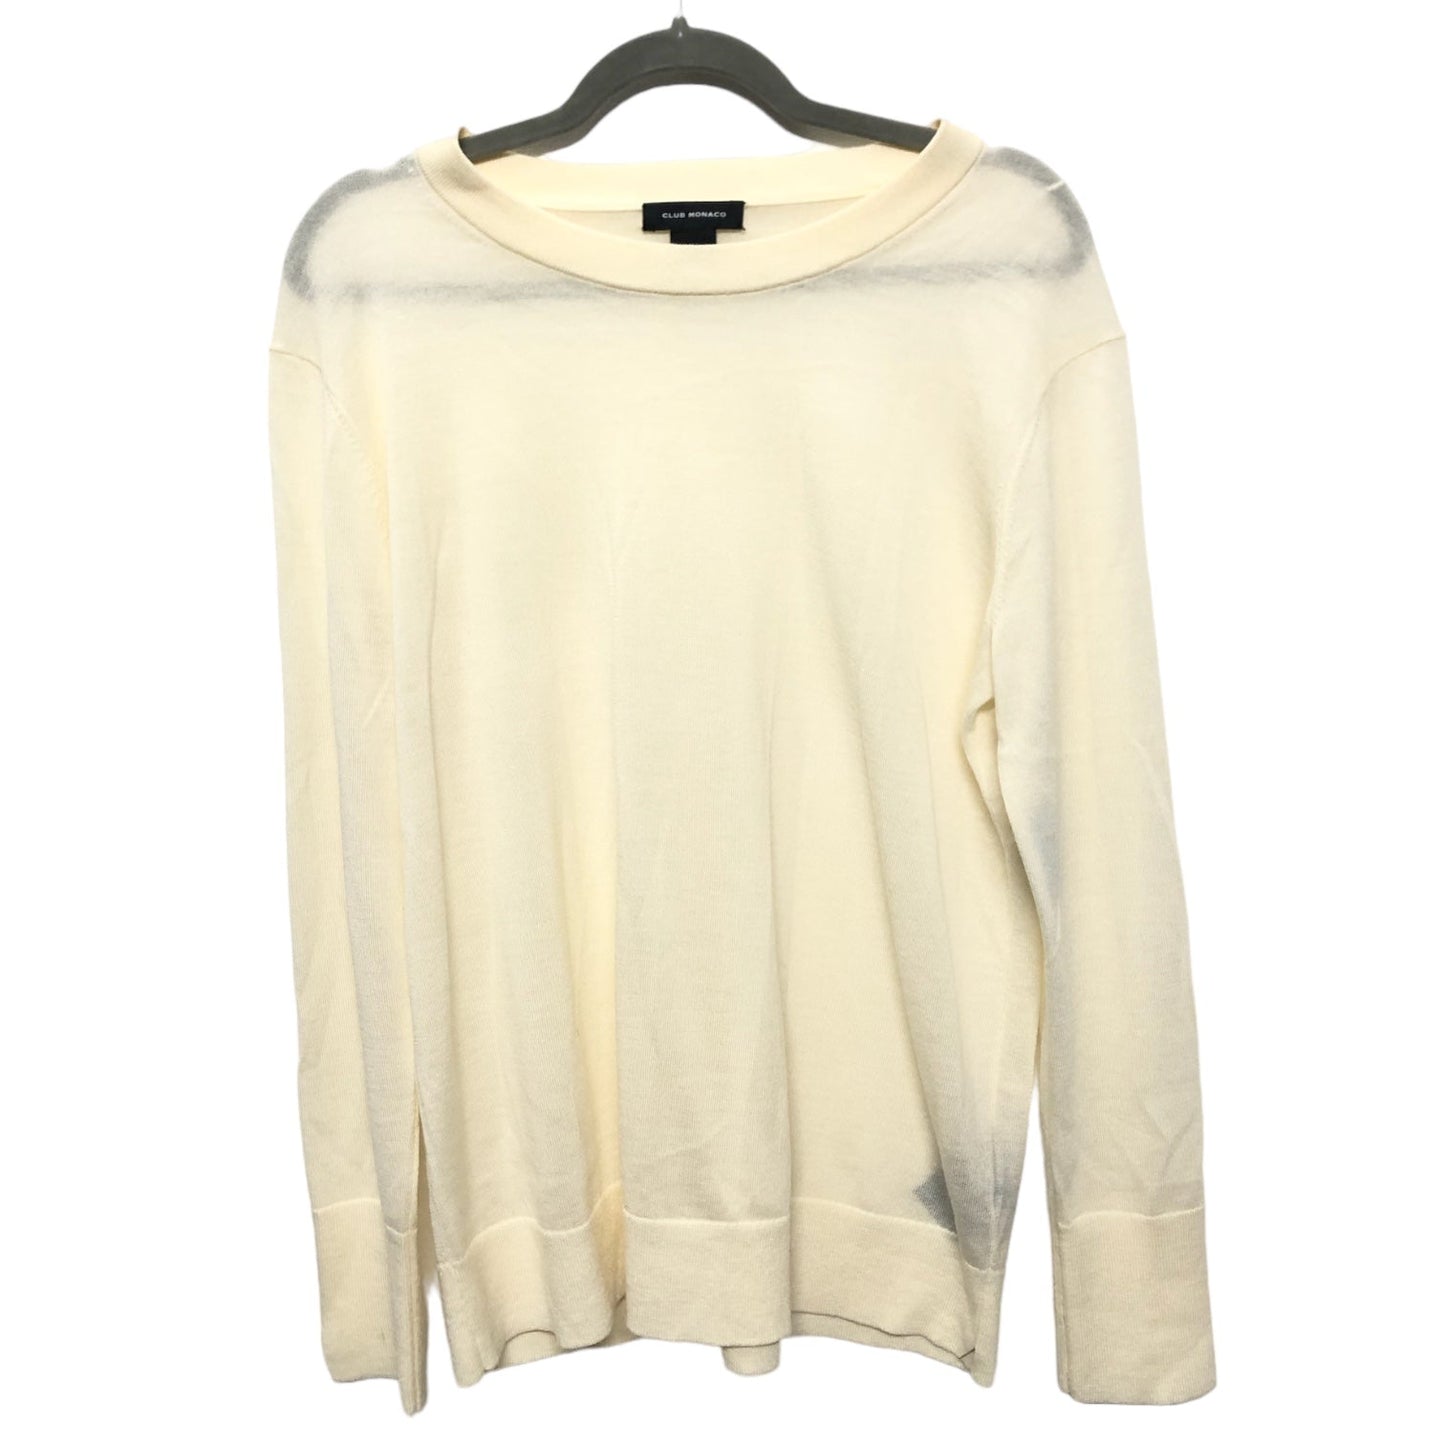 Sweater By Club Monaco  Size: L